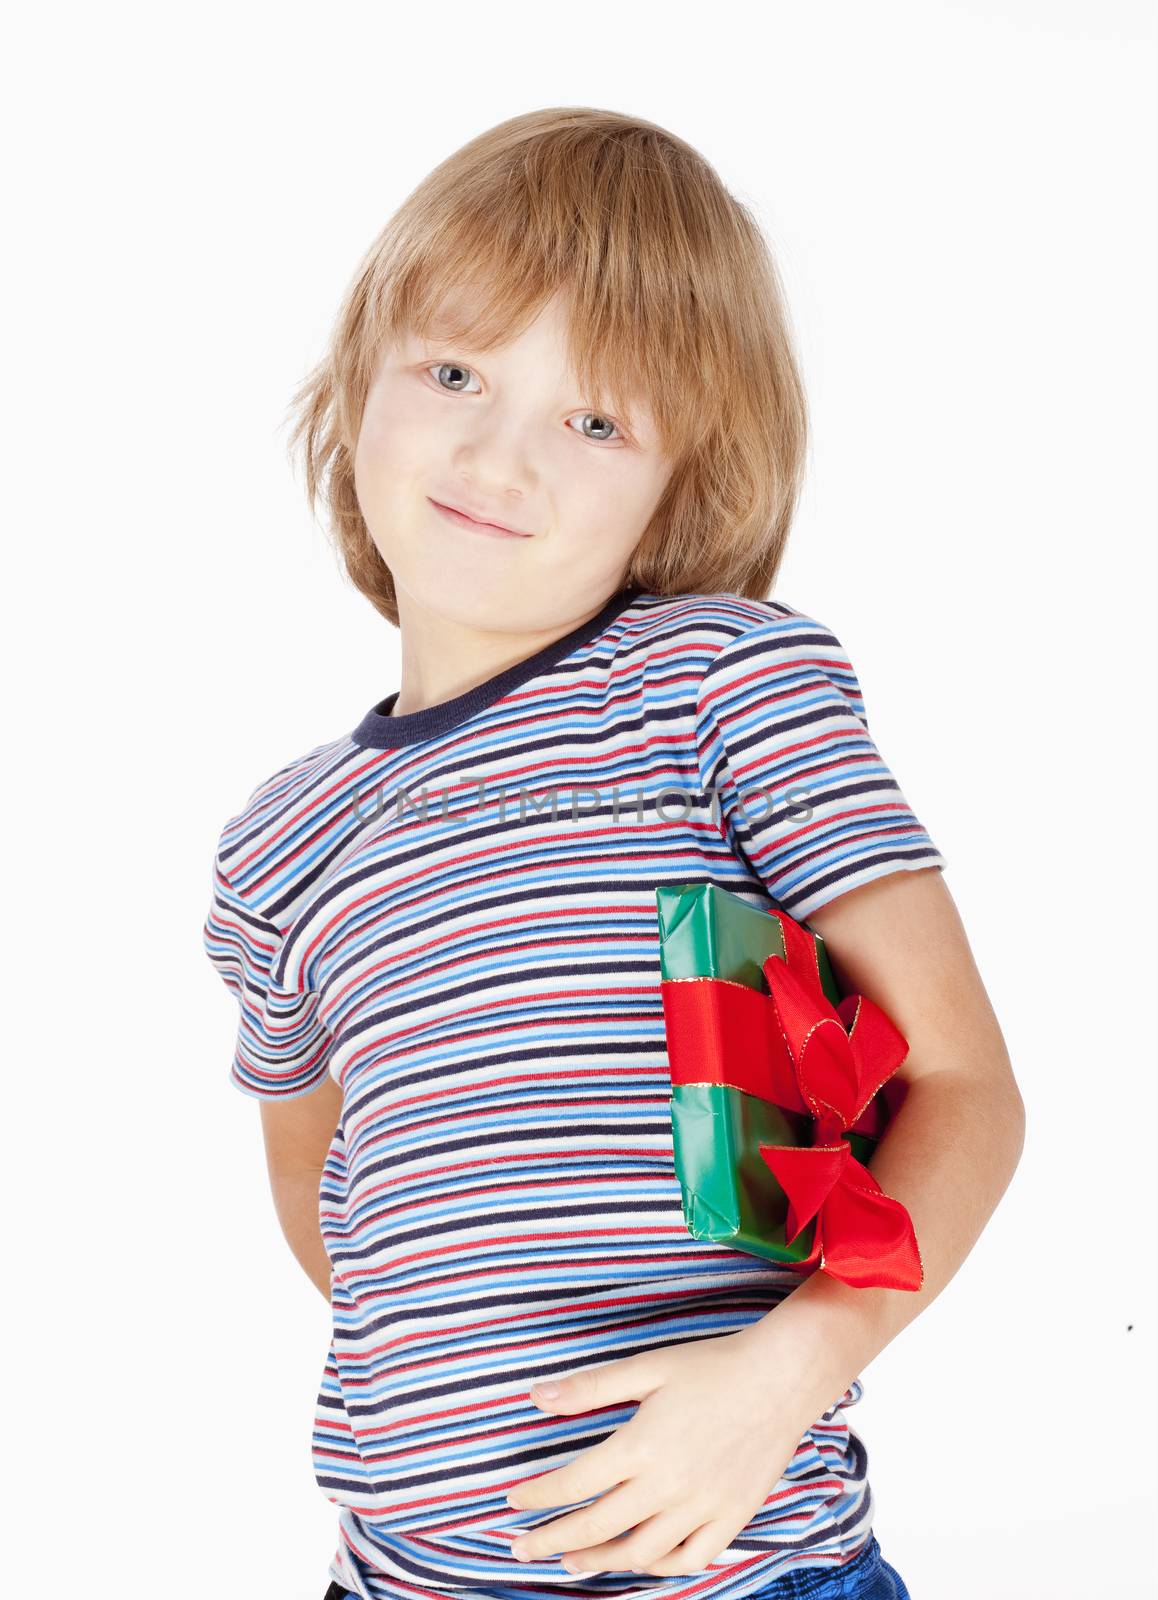 Boy Holding a Present by courtyardpix